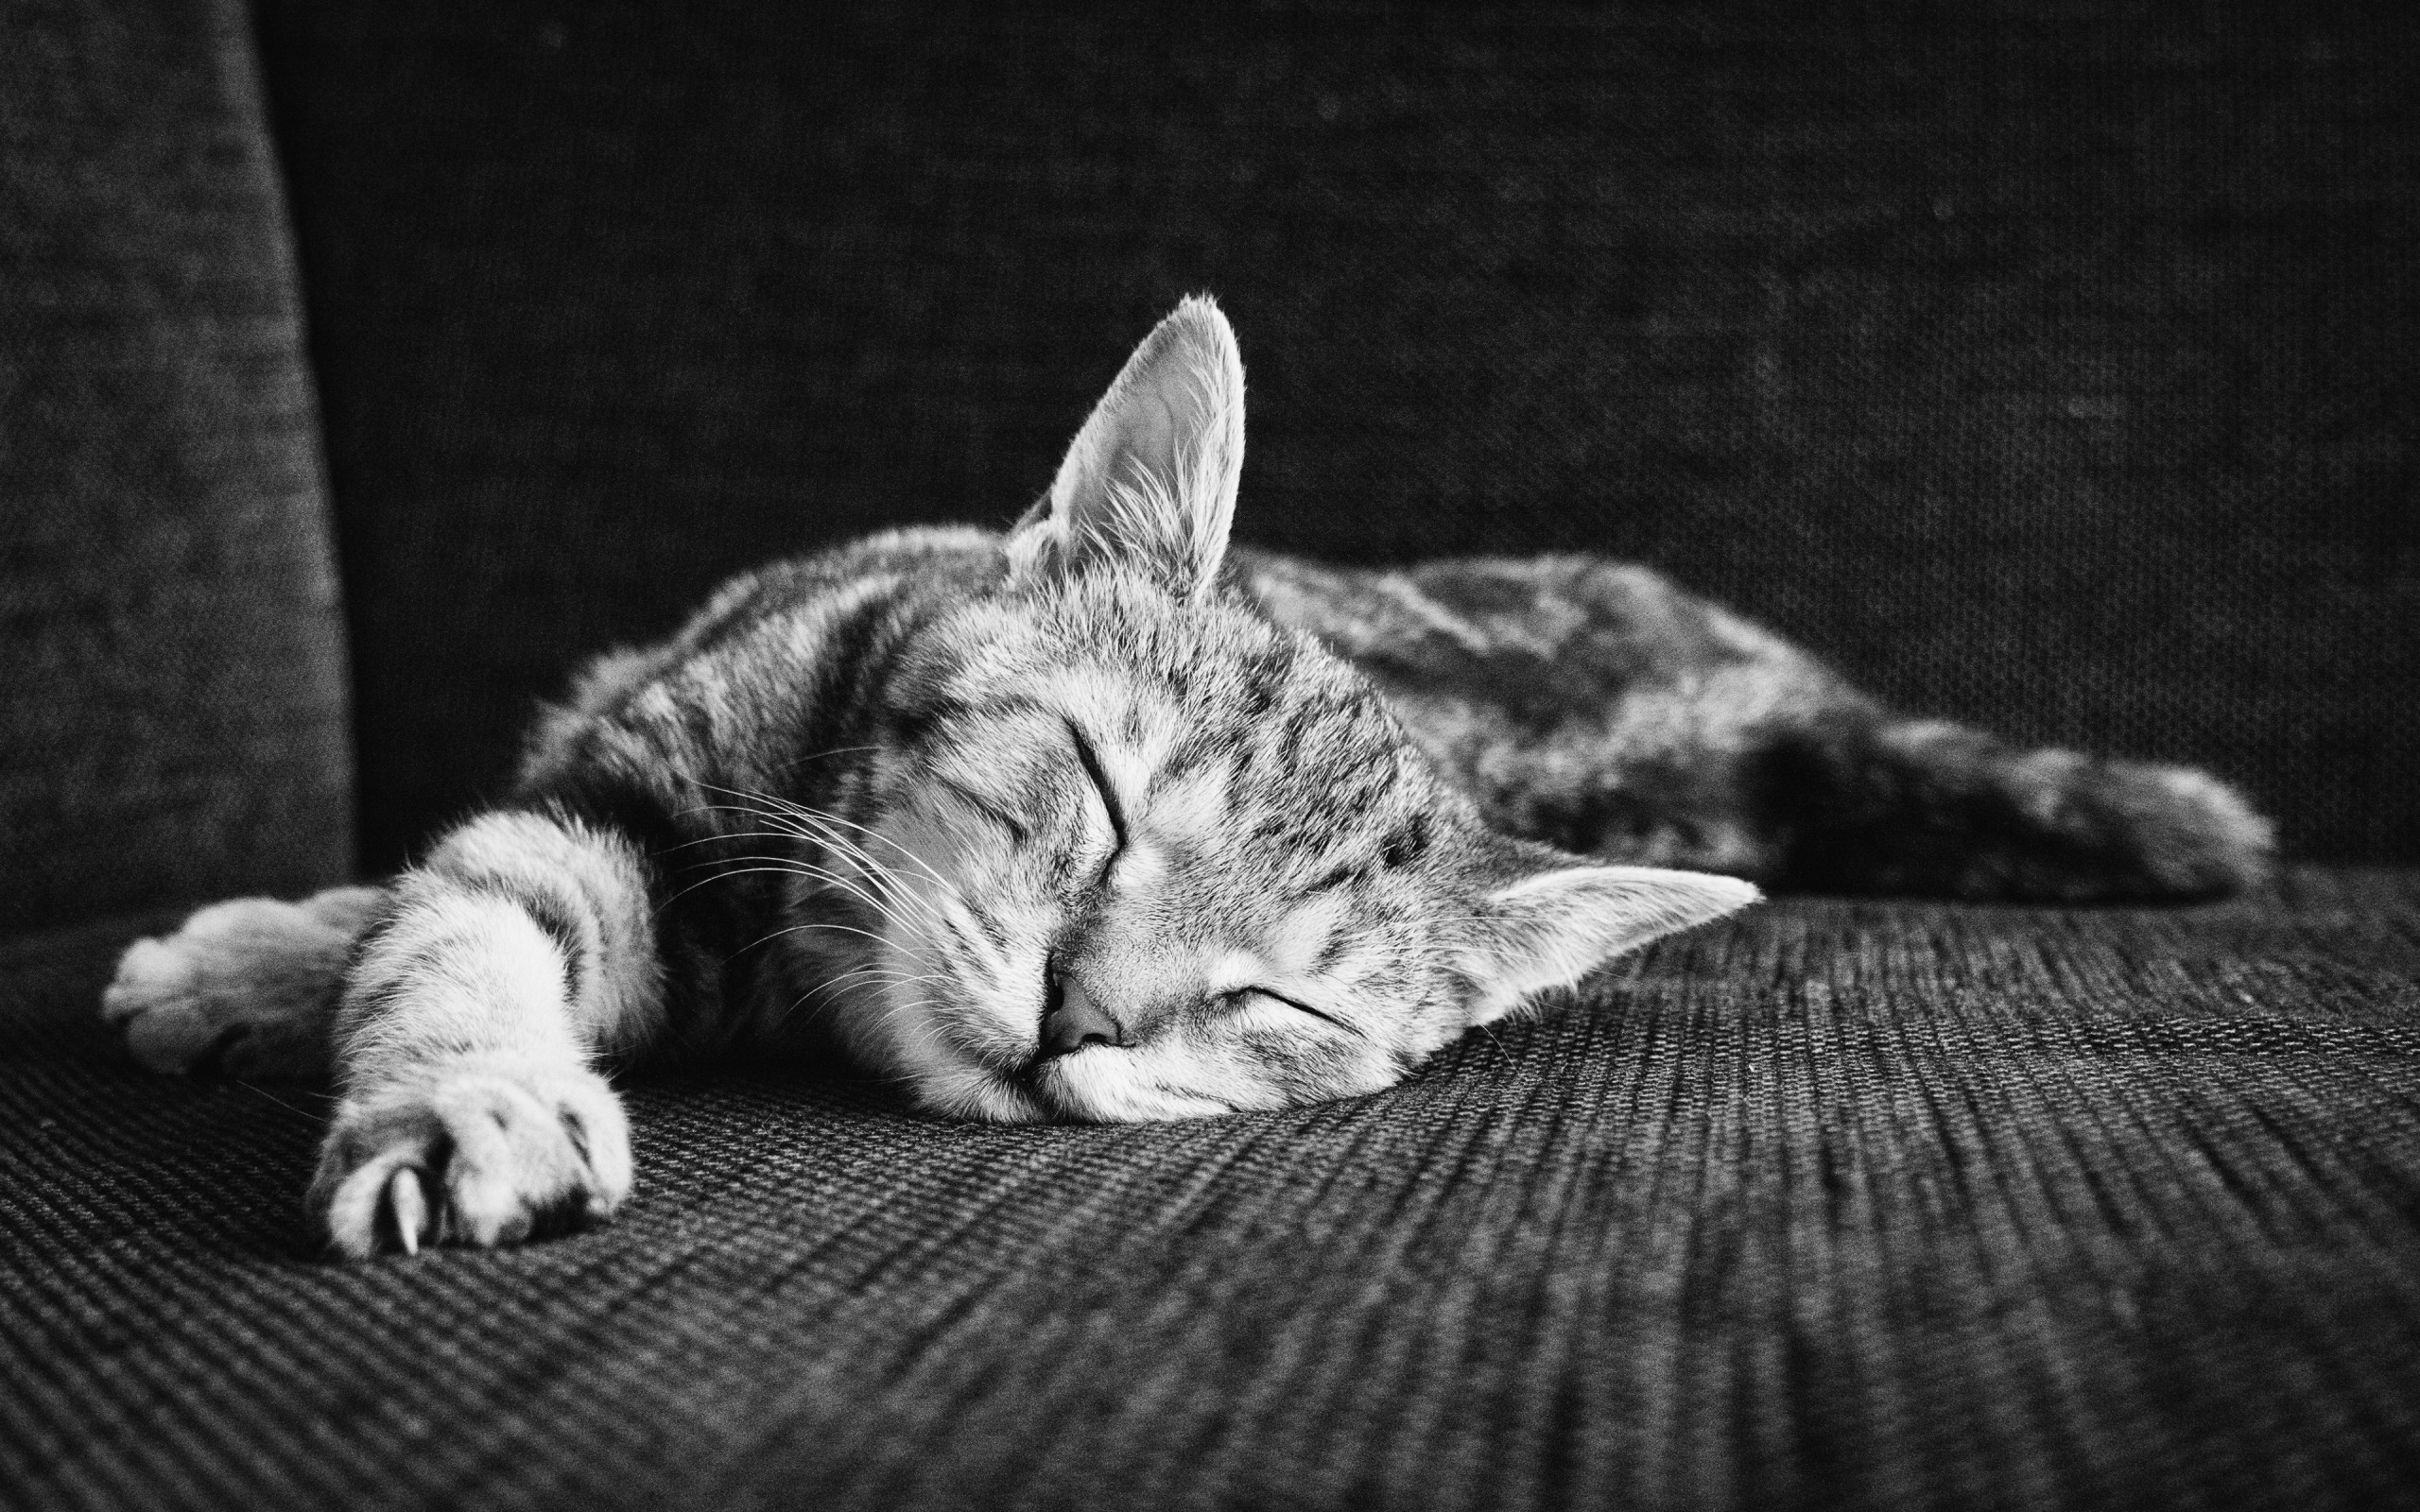 Zen of sleeping kitten wallpaper 2560x1600